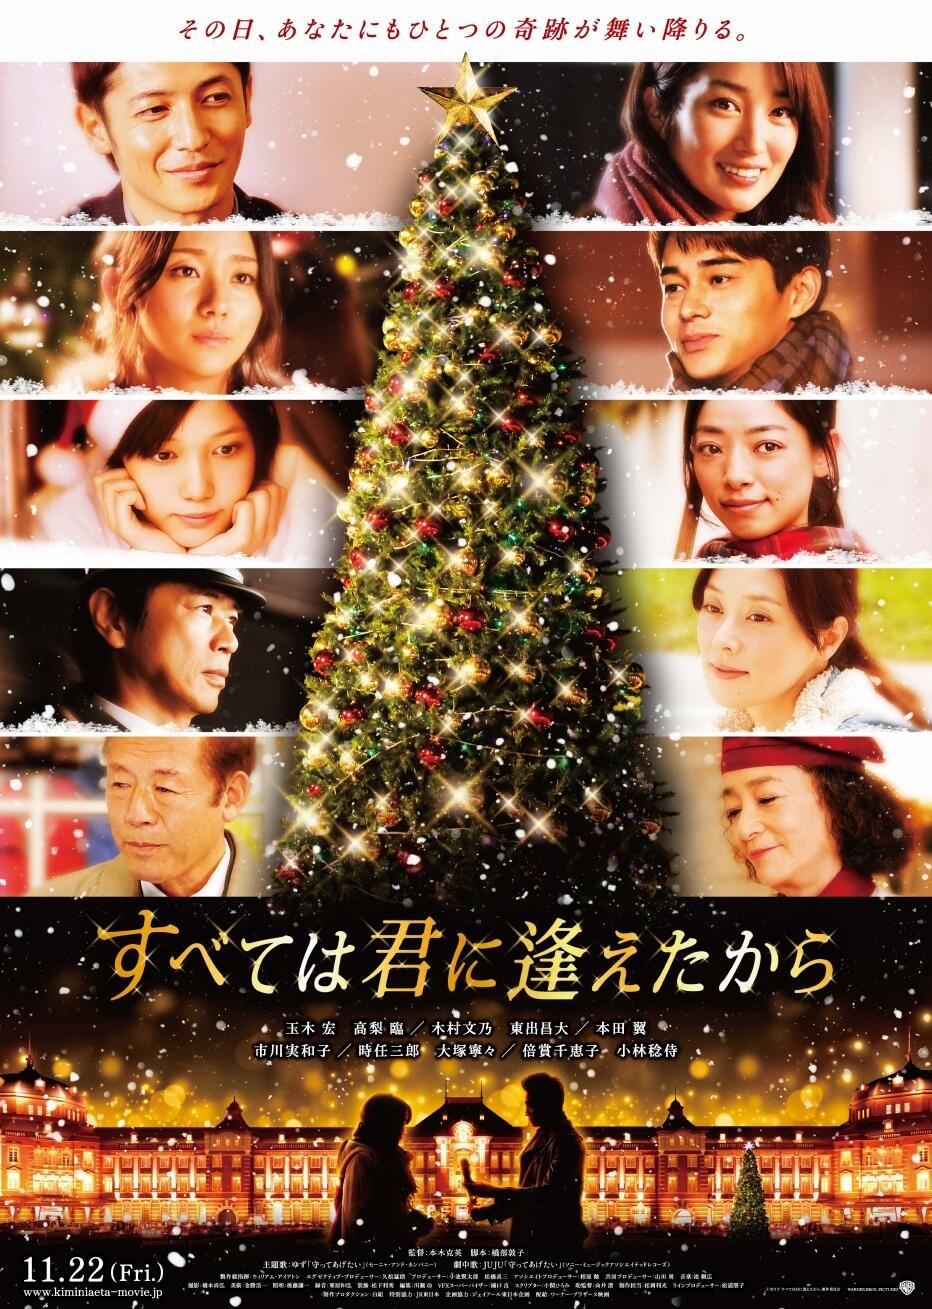 Extra Large Movie Poster Image for Subete wa kimi ni aetakara 